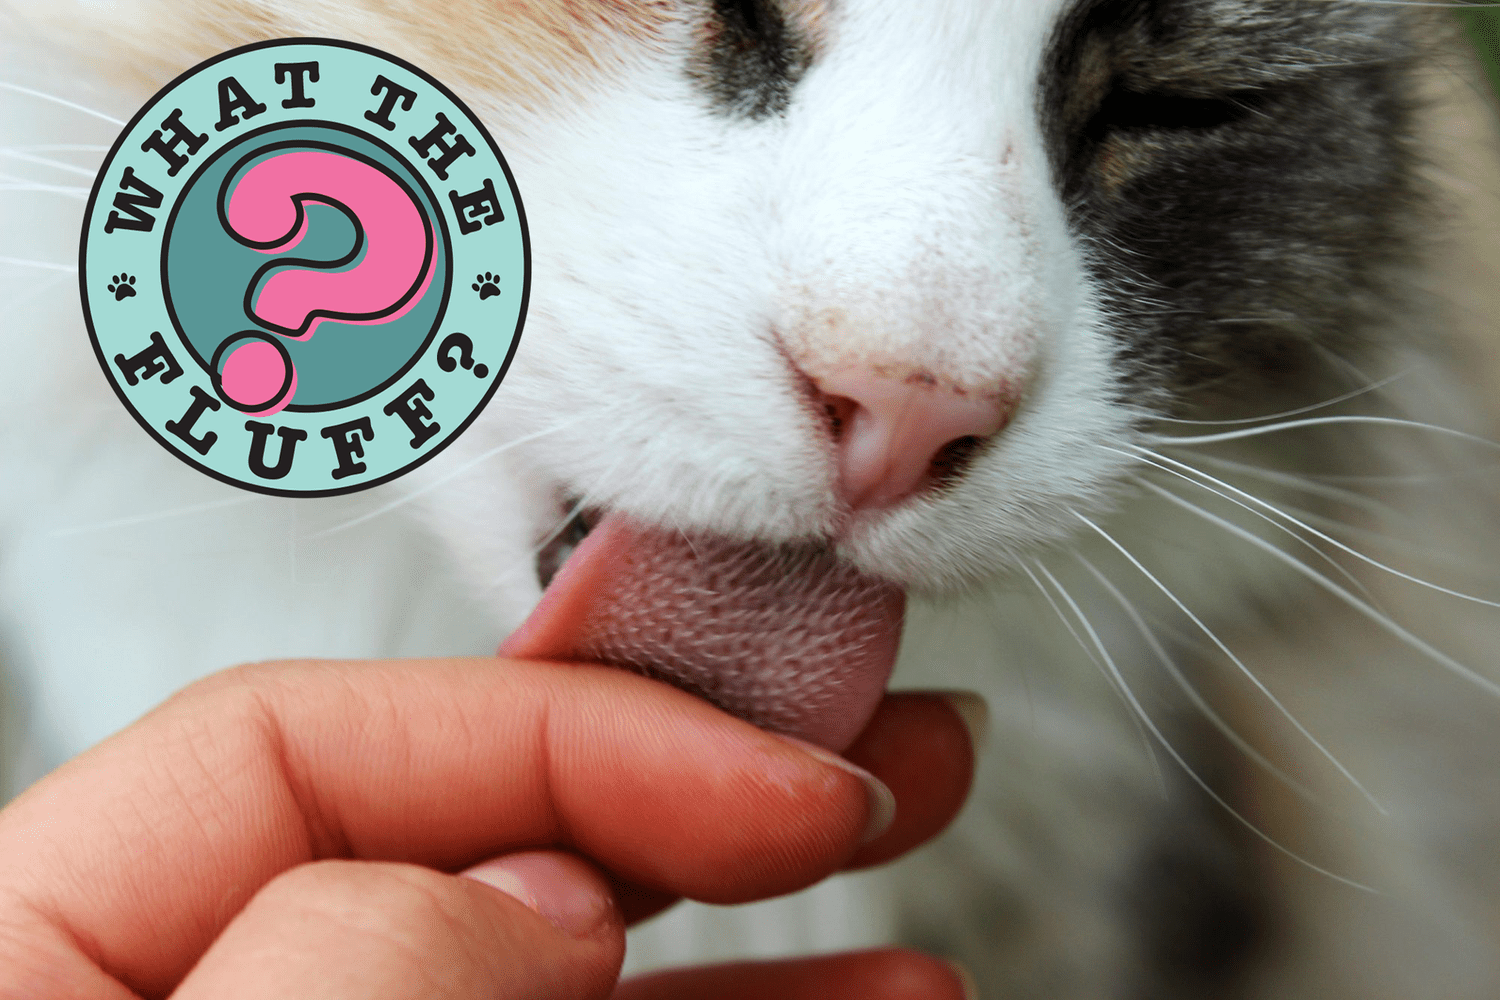 cat licking finger